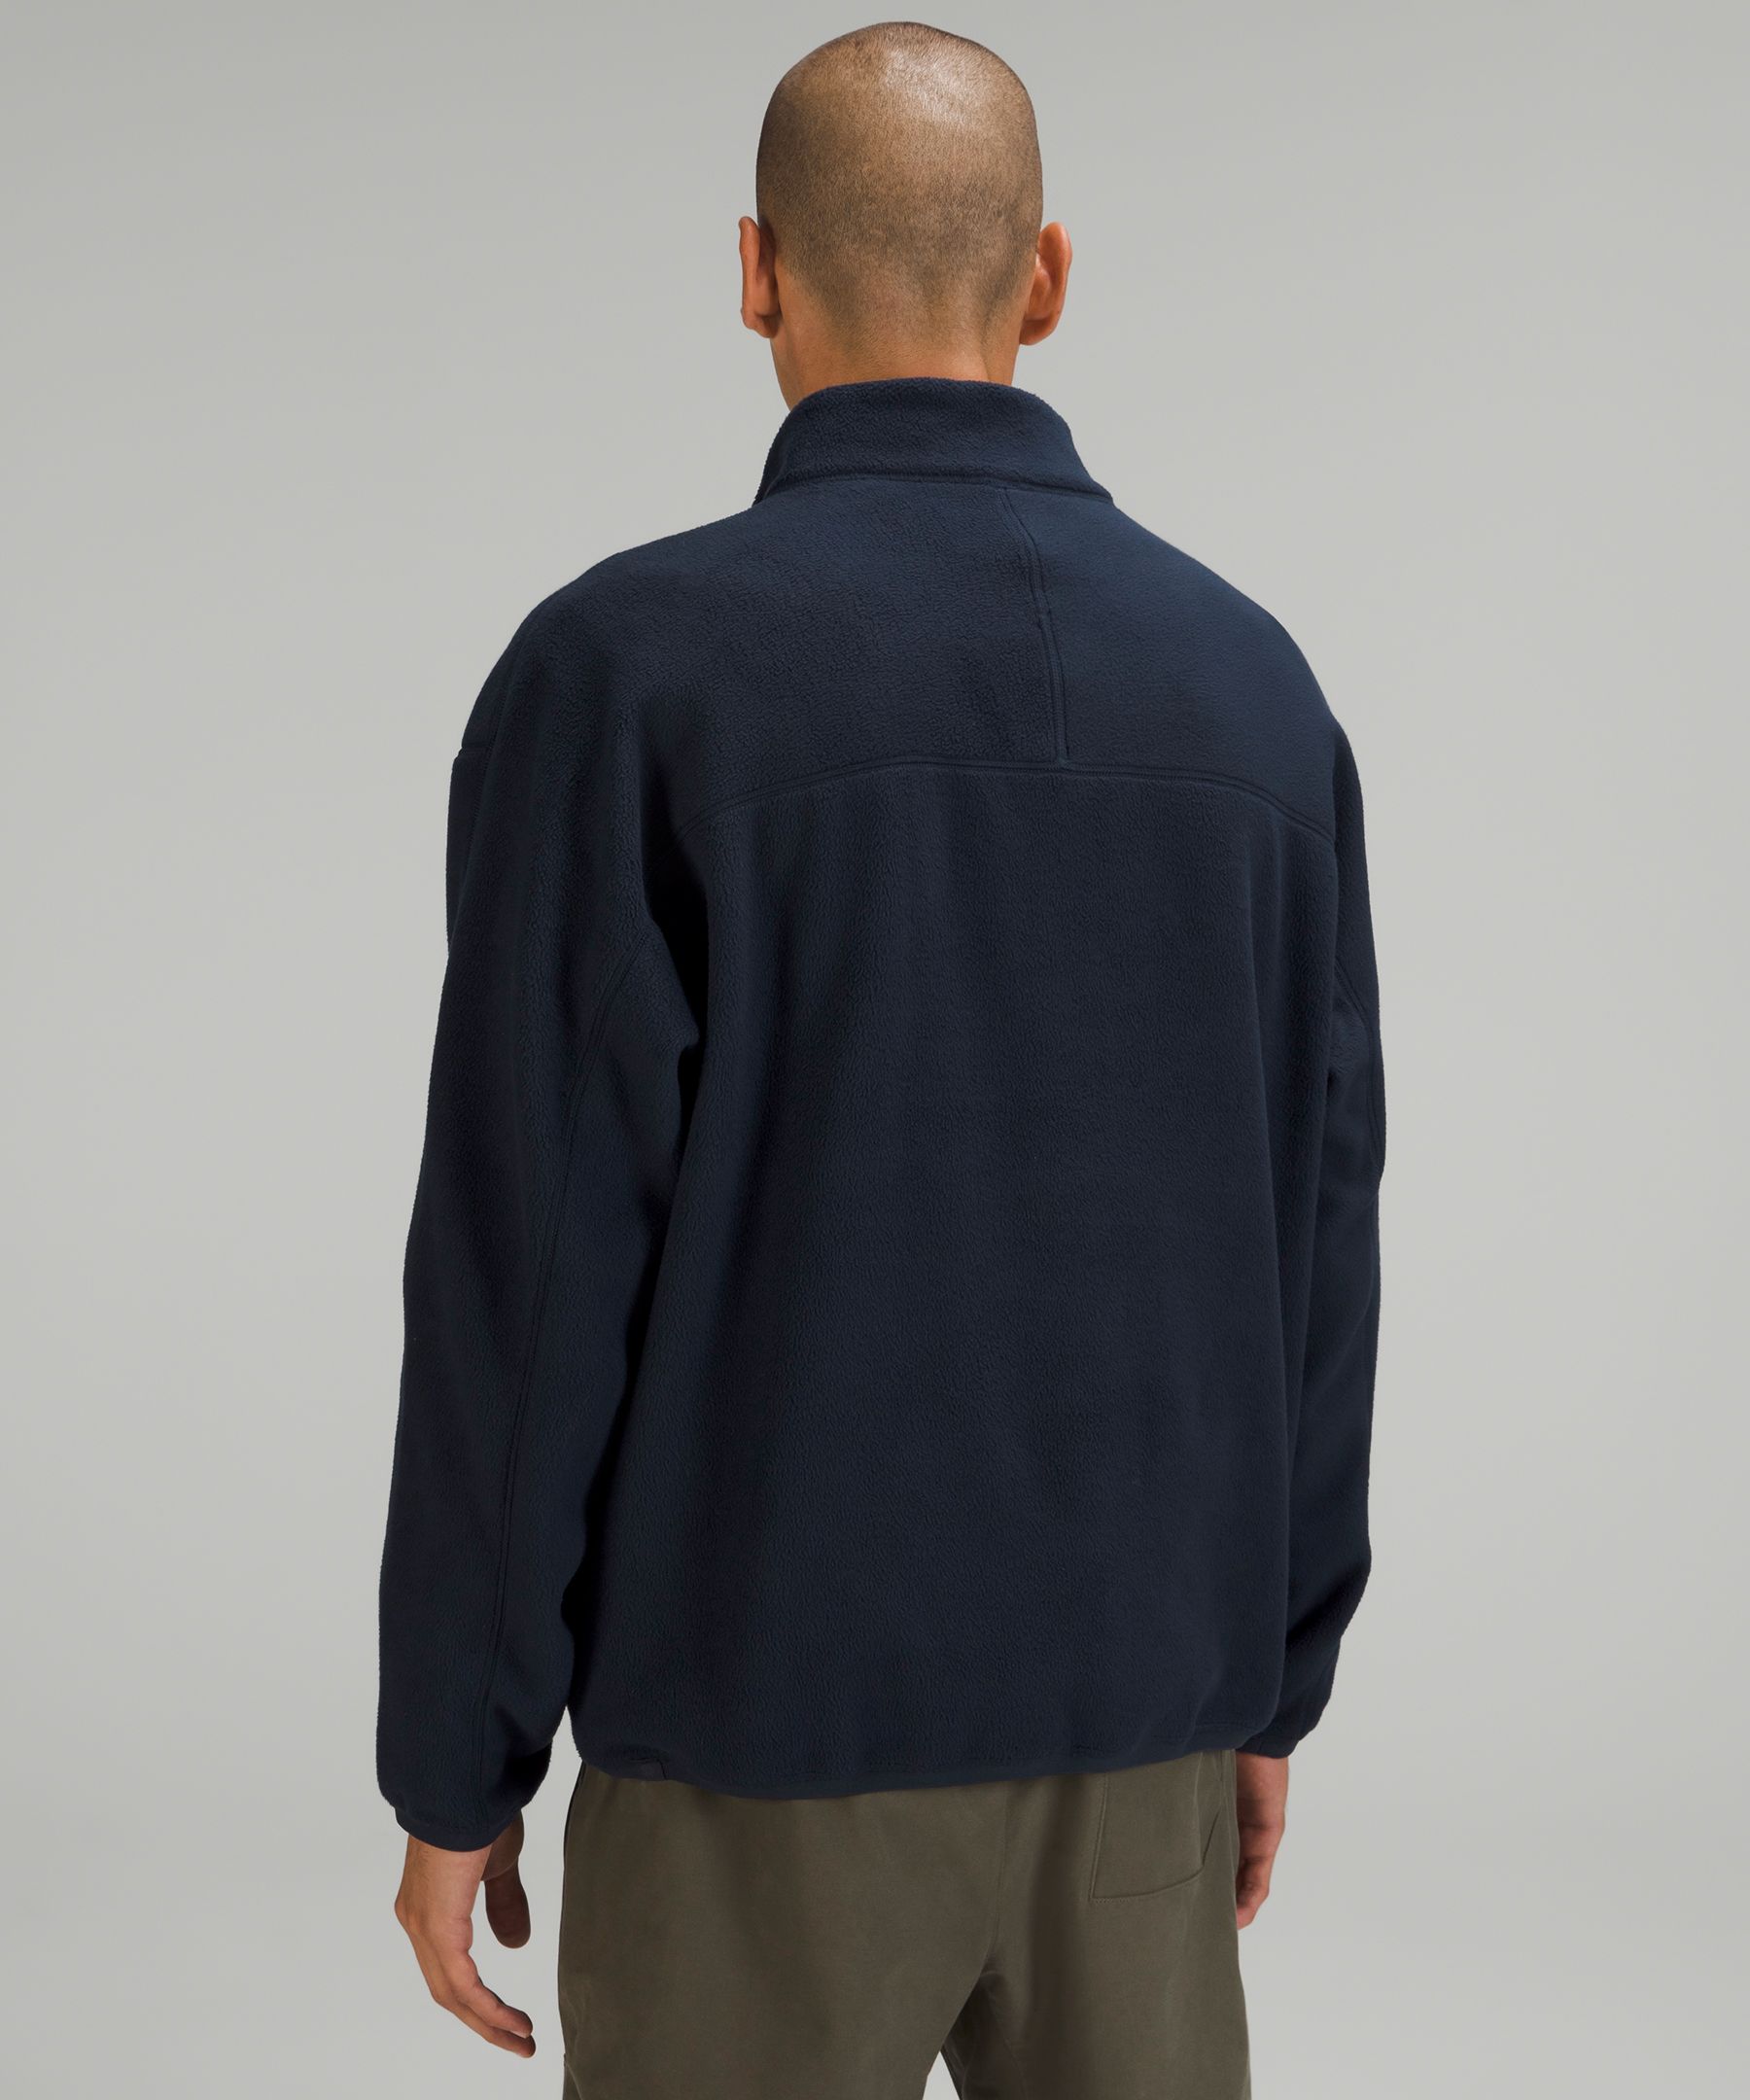 Fit Pic: Oversized Fleece Half Zip - Pomegranate (M); MVT Shirt - ELTU/OCNA  (M); LTT Jogger - Graphite Grey (S) : r/lululemon